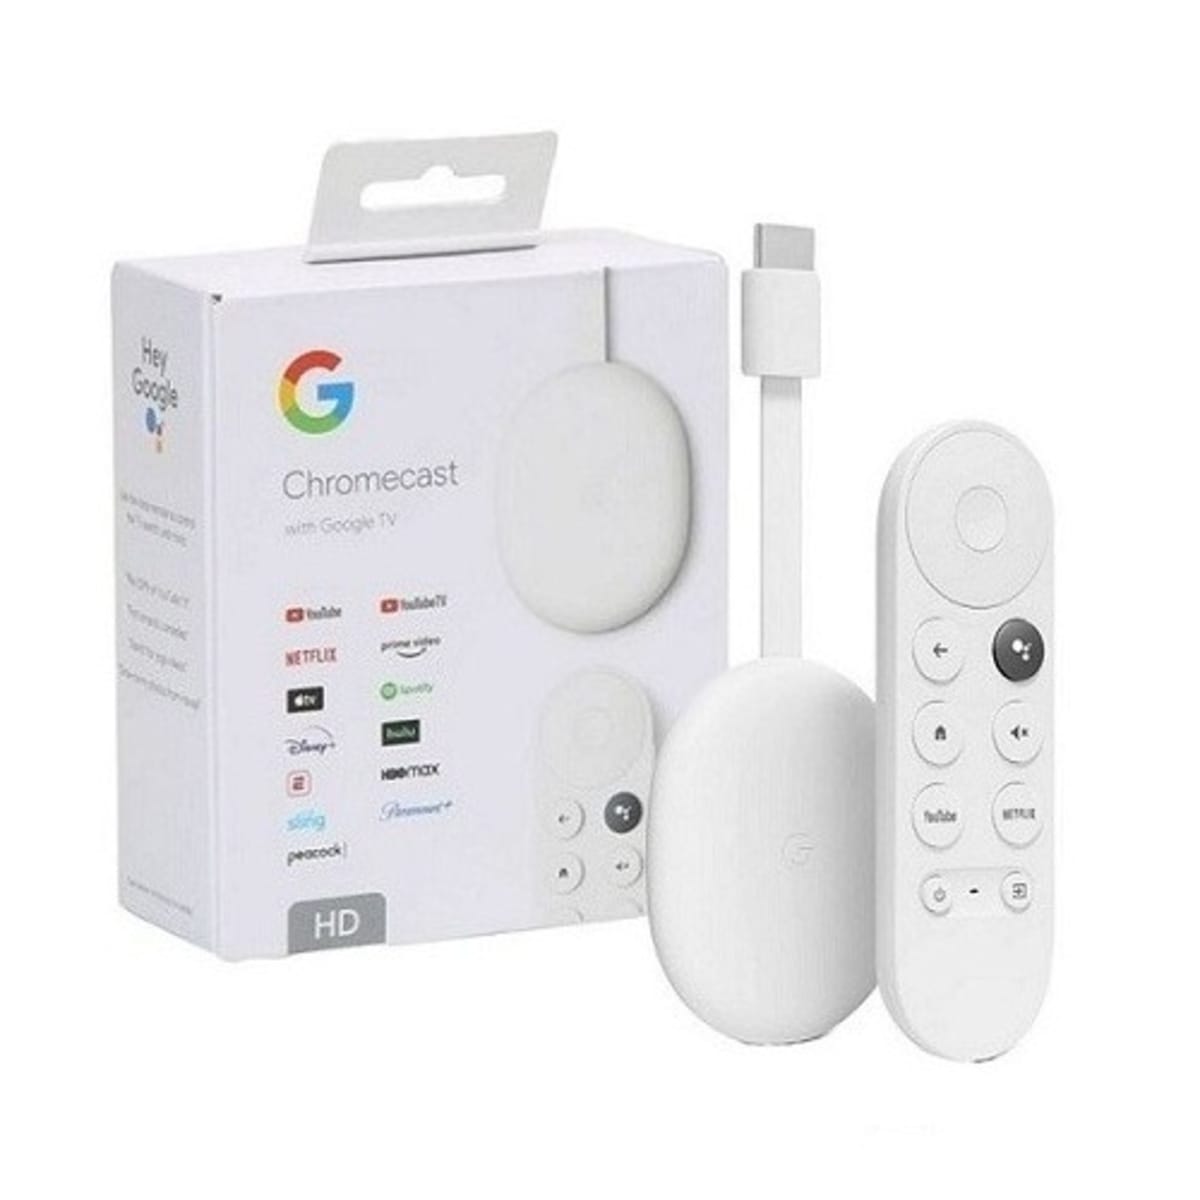 Hey Google: Make your next Chromecast like this